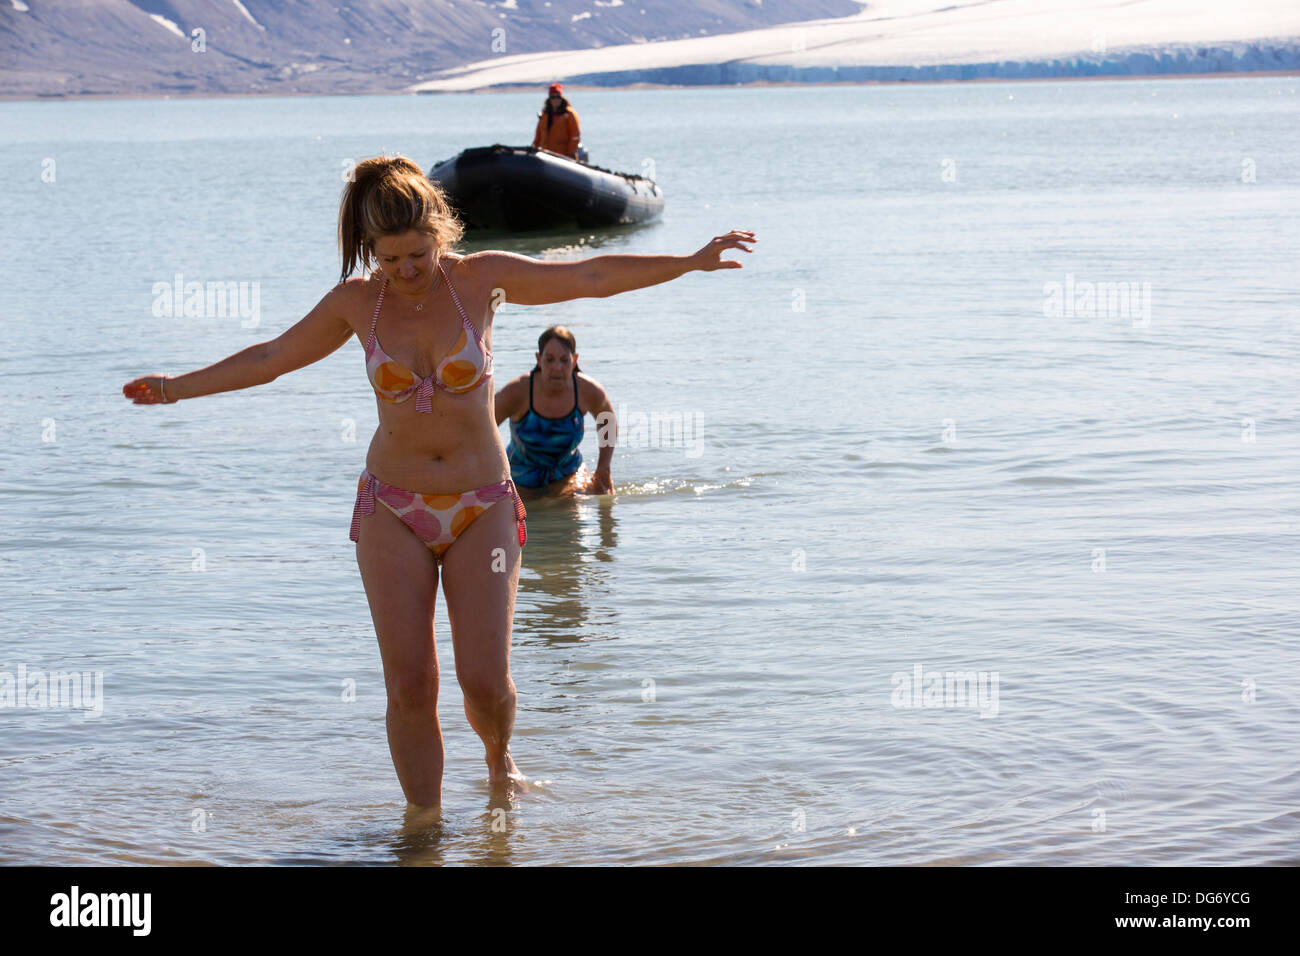 Cold woman bikini hi-res stock photography and images - Alamy